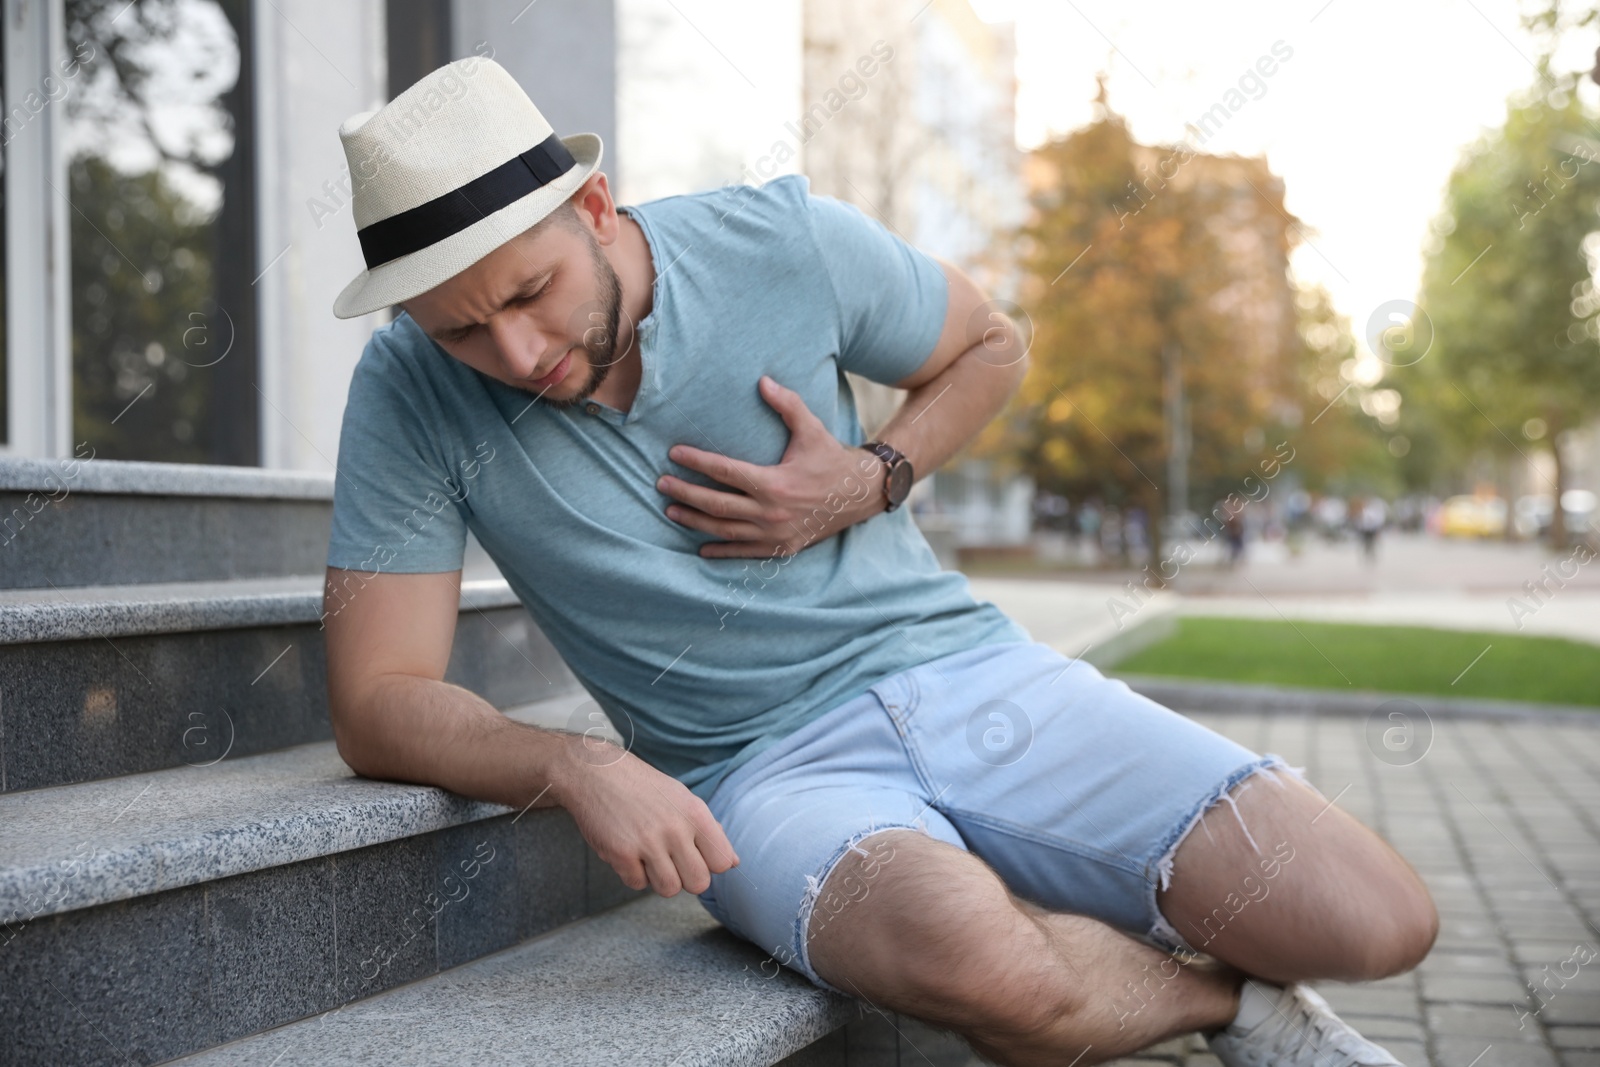 Photo of Man having heart attack on city street